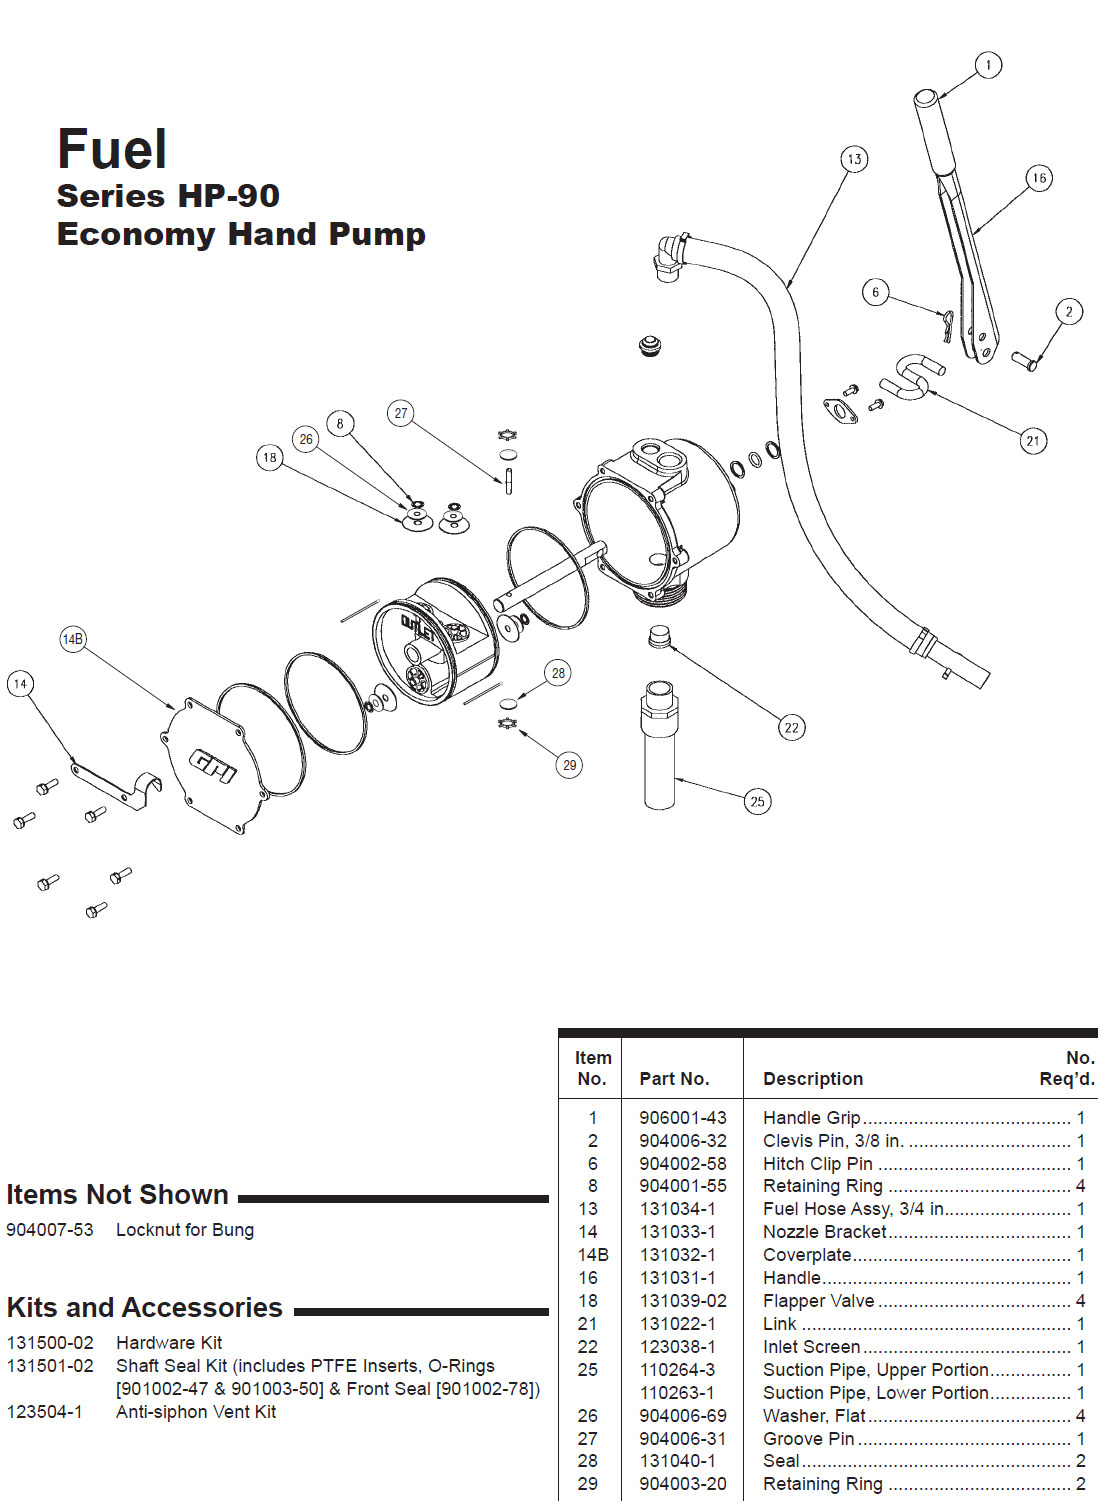 HP-90 Parts Economy Hand Pump Image